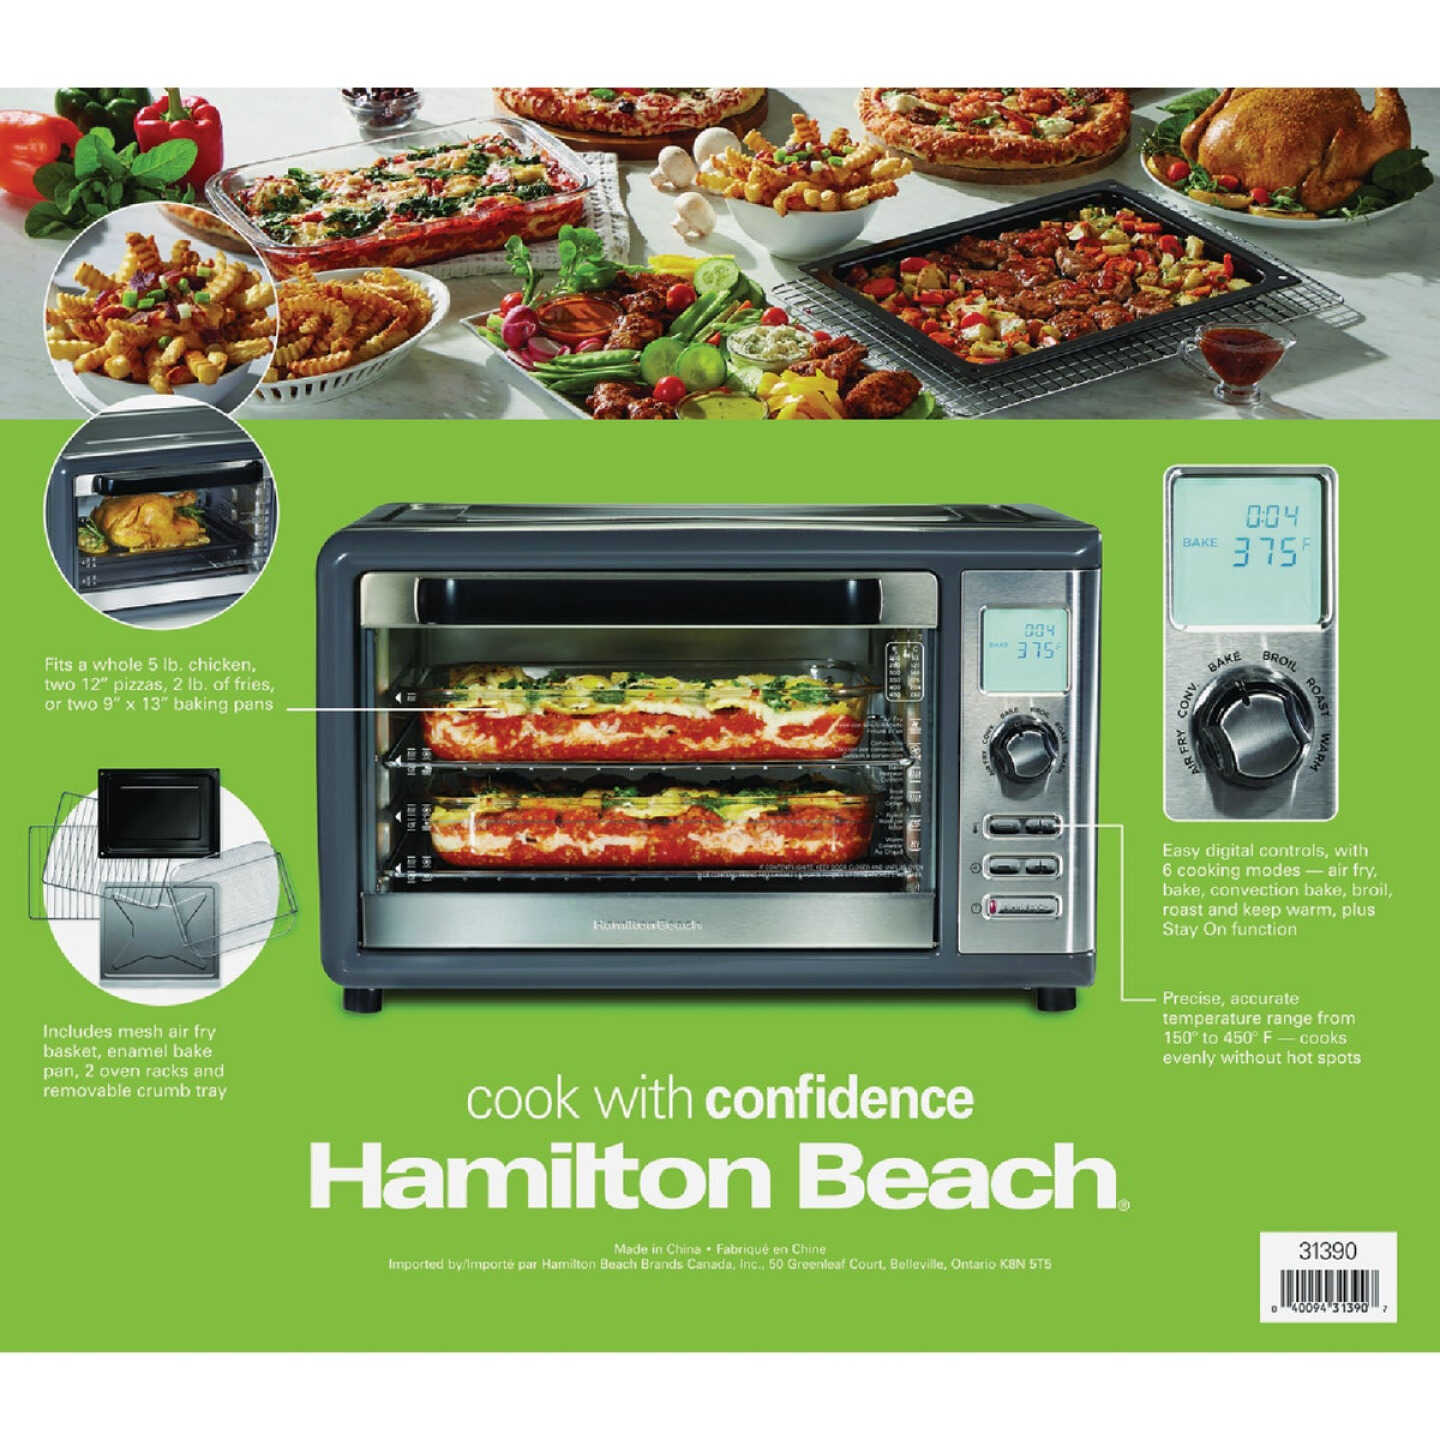 Hamilton Beach Sure-Crisp XL Digital Air Fryer Oven - Tiger Island